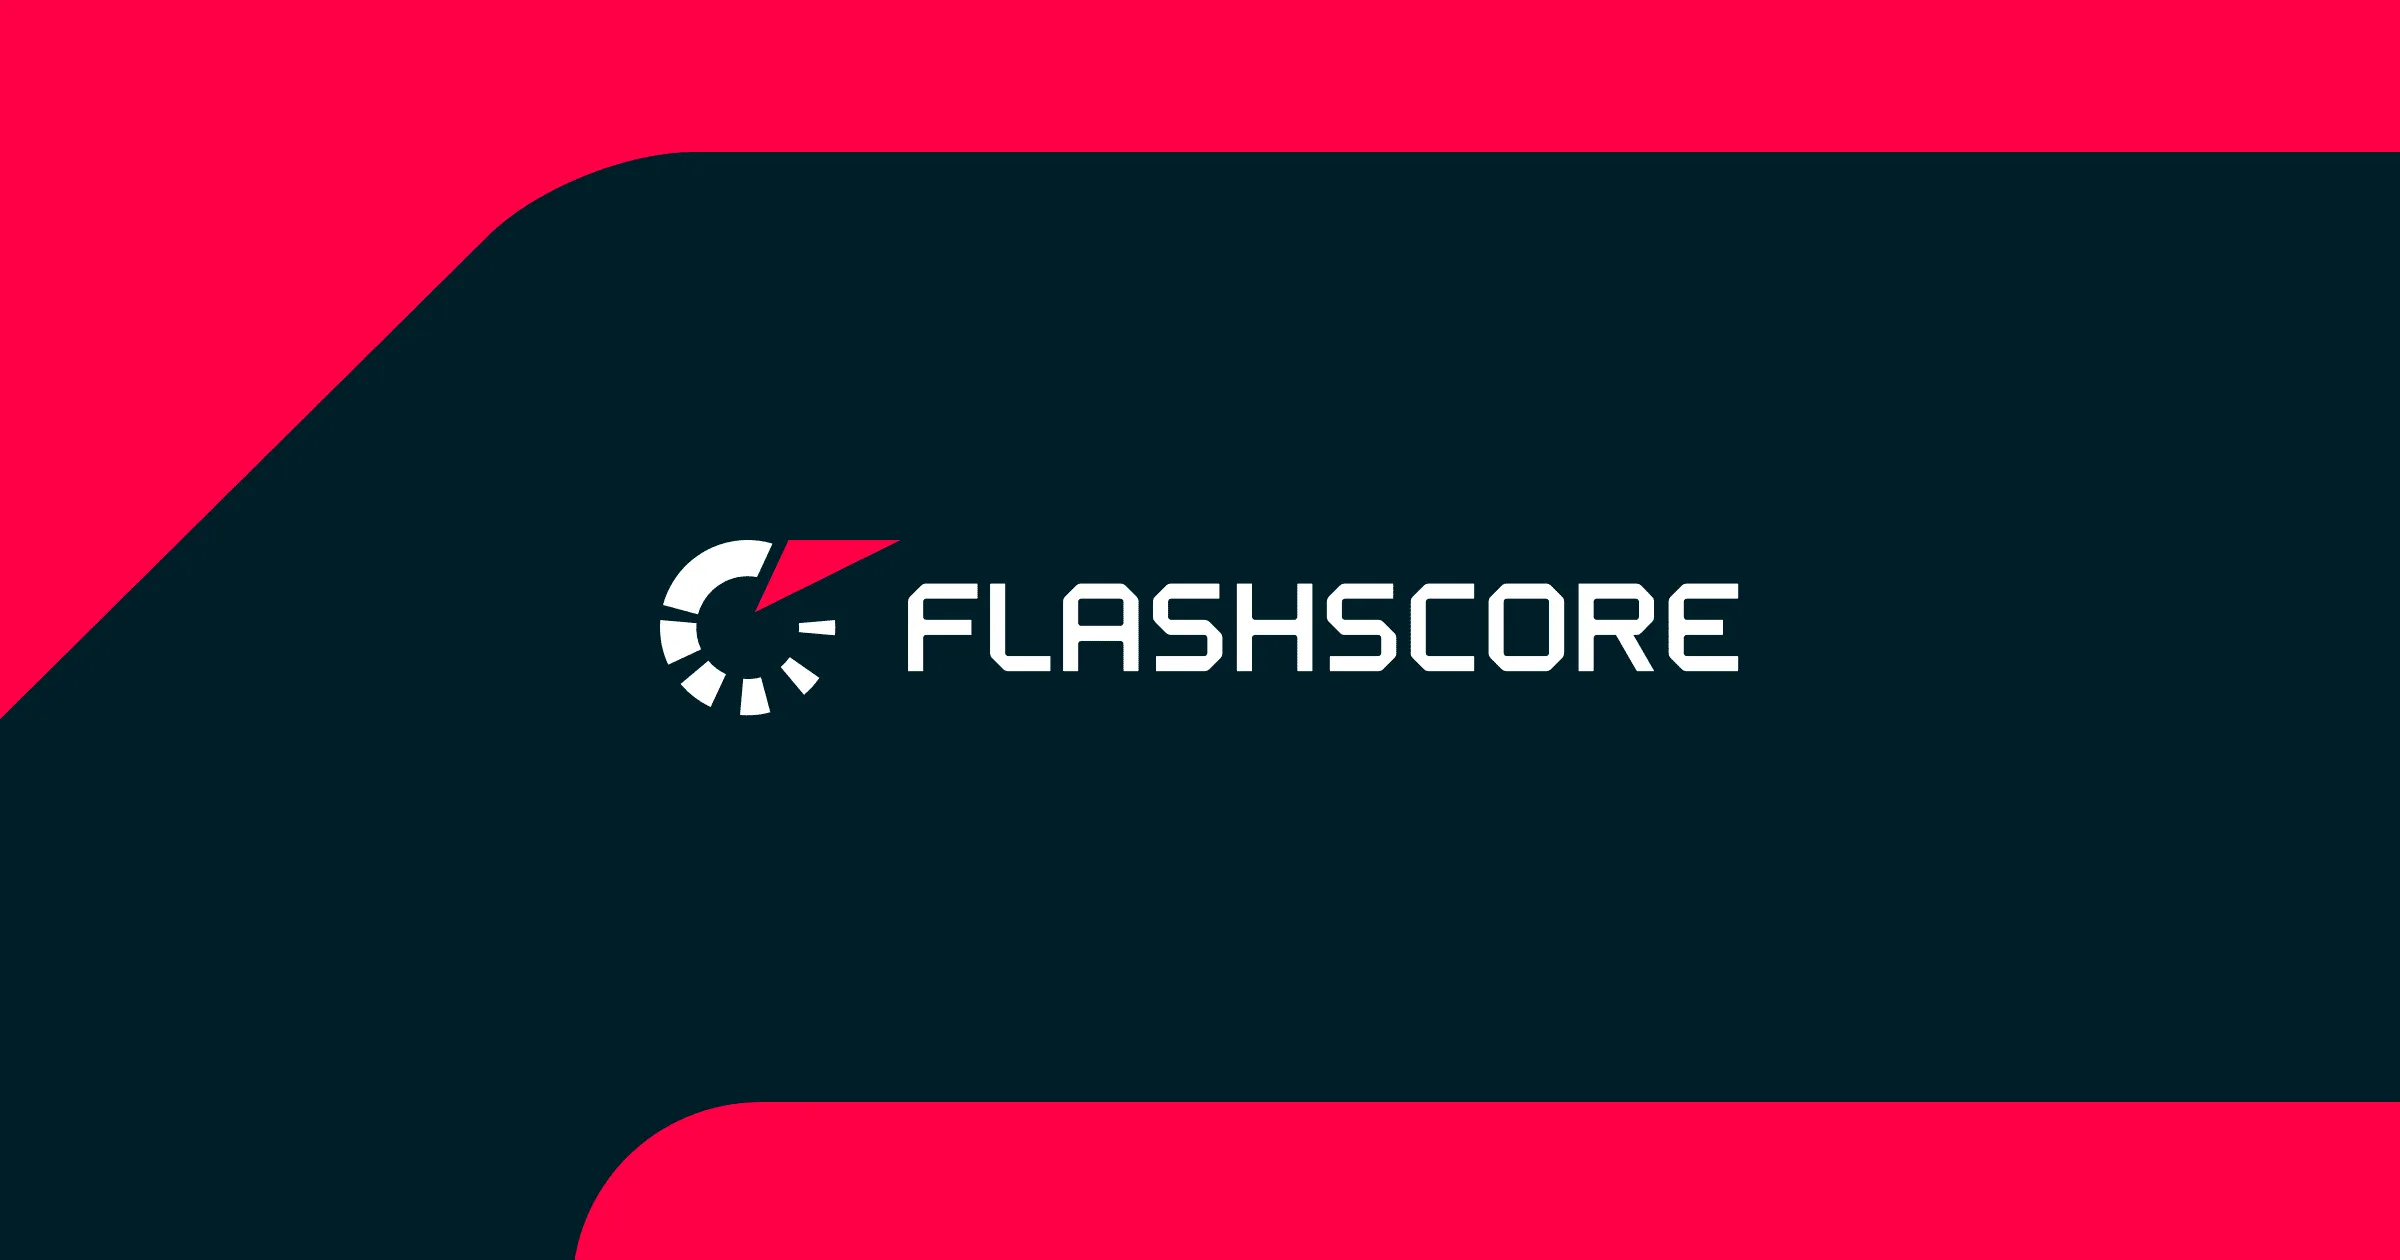 Resultados de futsal ao vivo jogos ao vivo - Flashscore.com.br